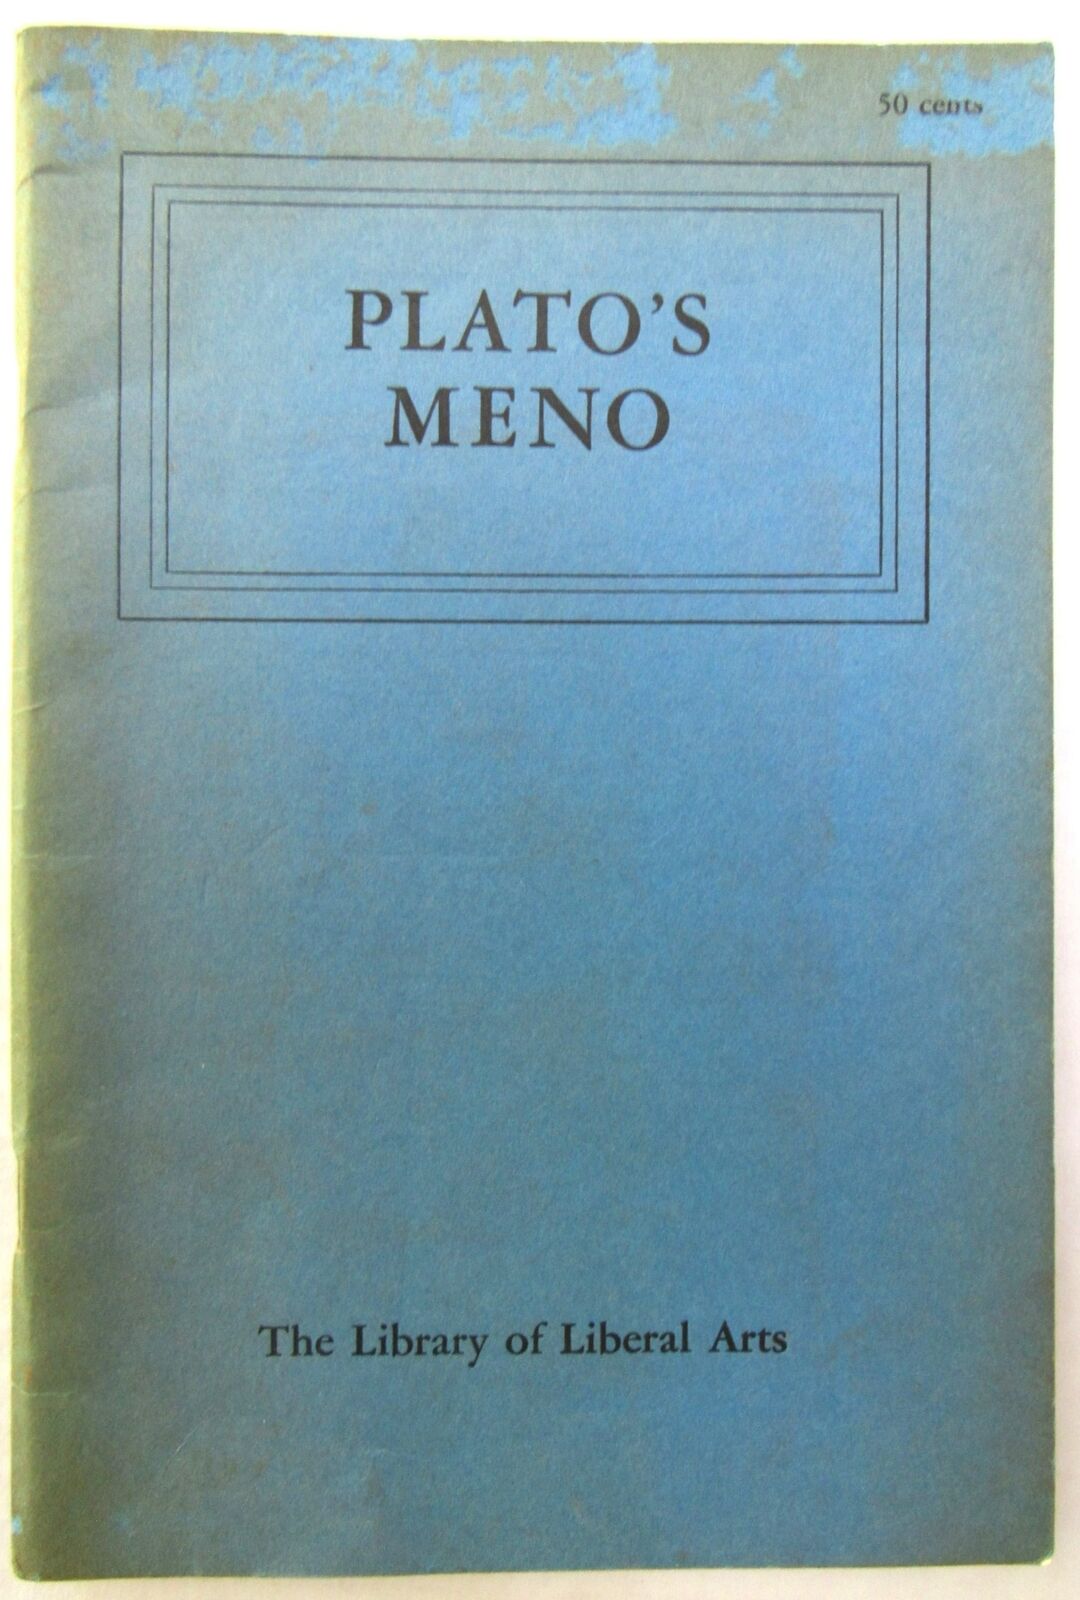 1957 MENO CLASSICS DIALOGUE PLATO PHILOSOPHY ANTIQUITY ANCIENT VINTAGE LIBERAL 